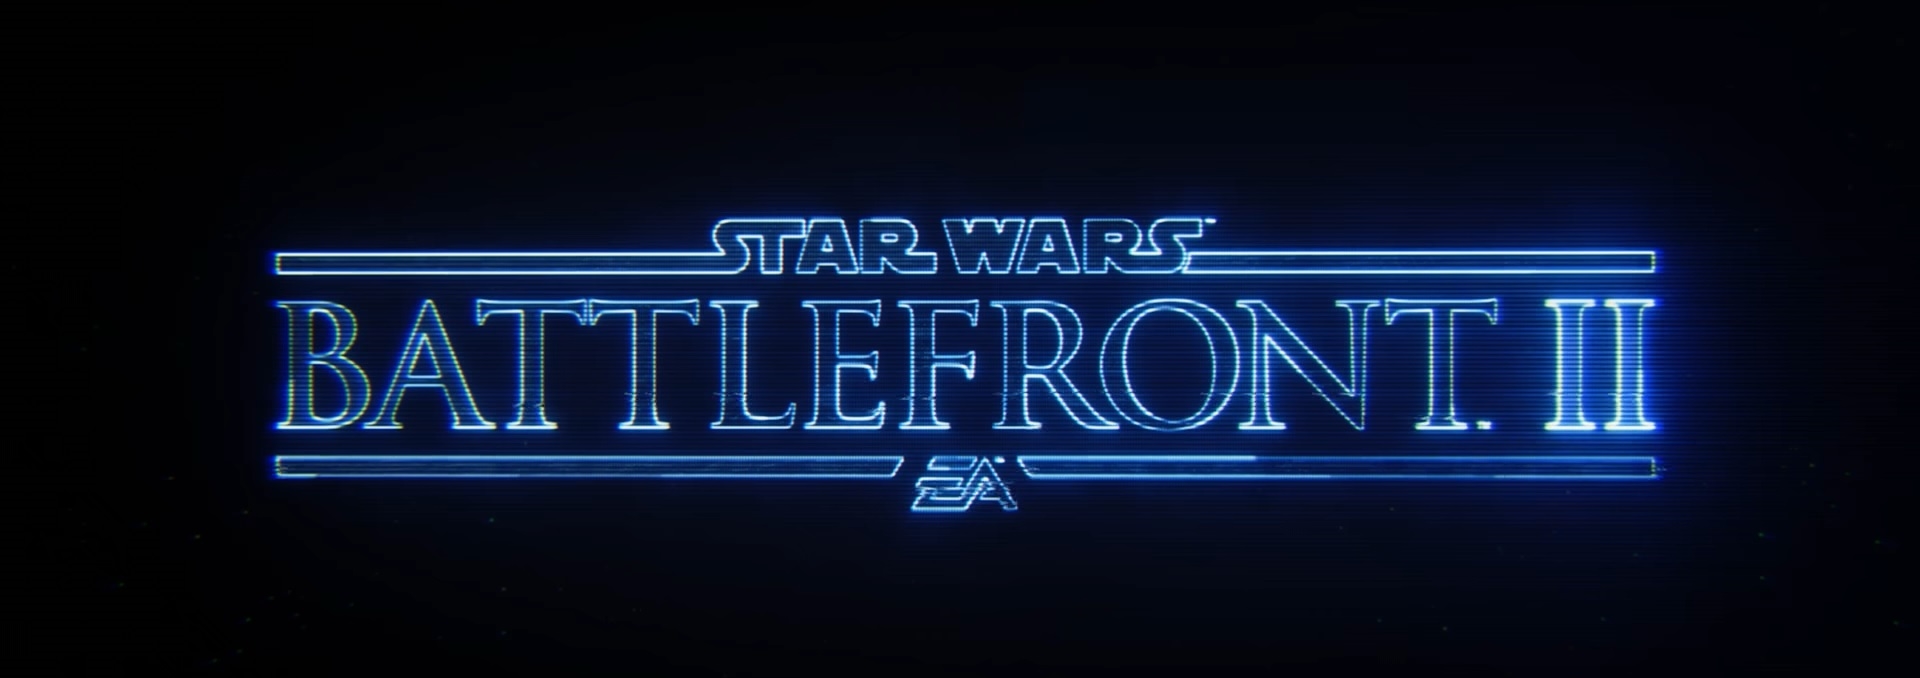 Star Wars: Battlefront 2 — проблемы с запуском, баги, вылеты